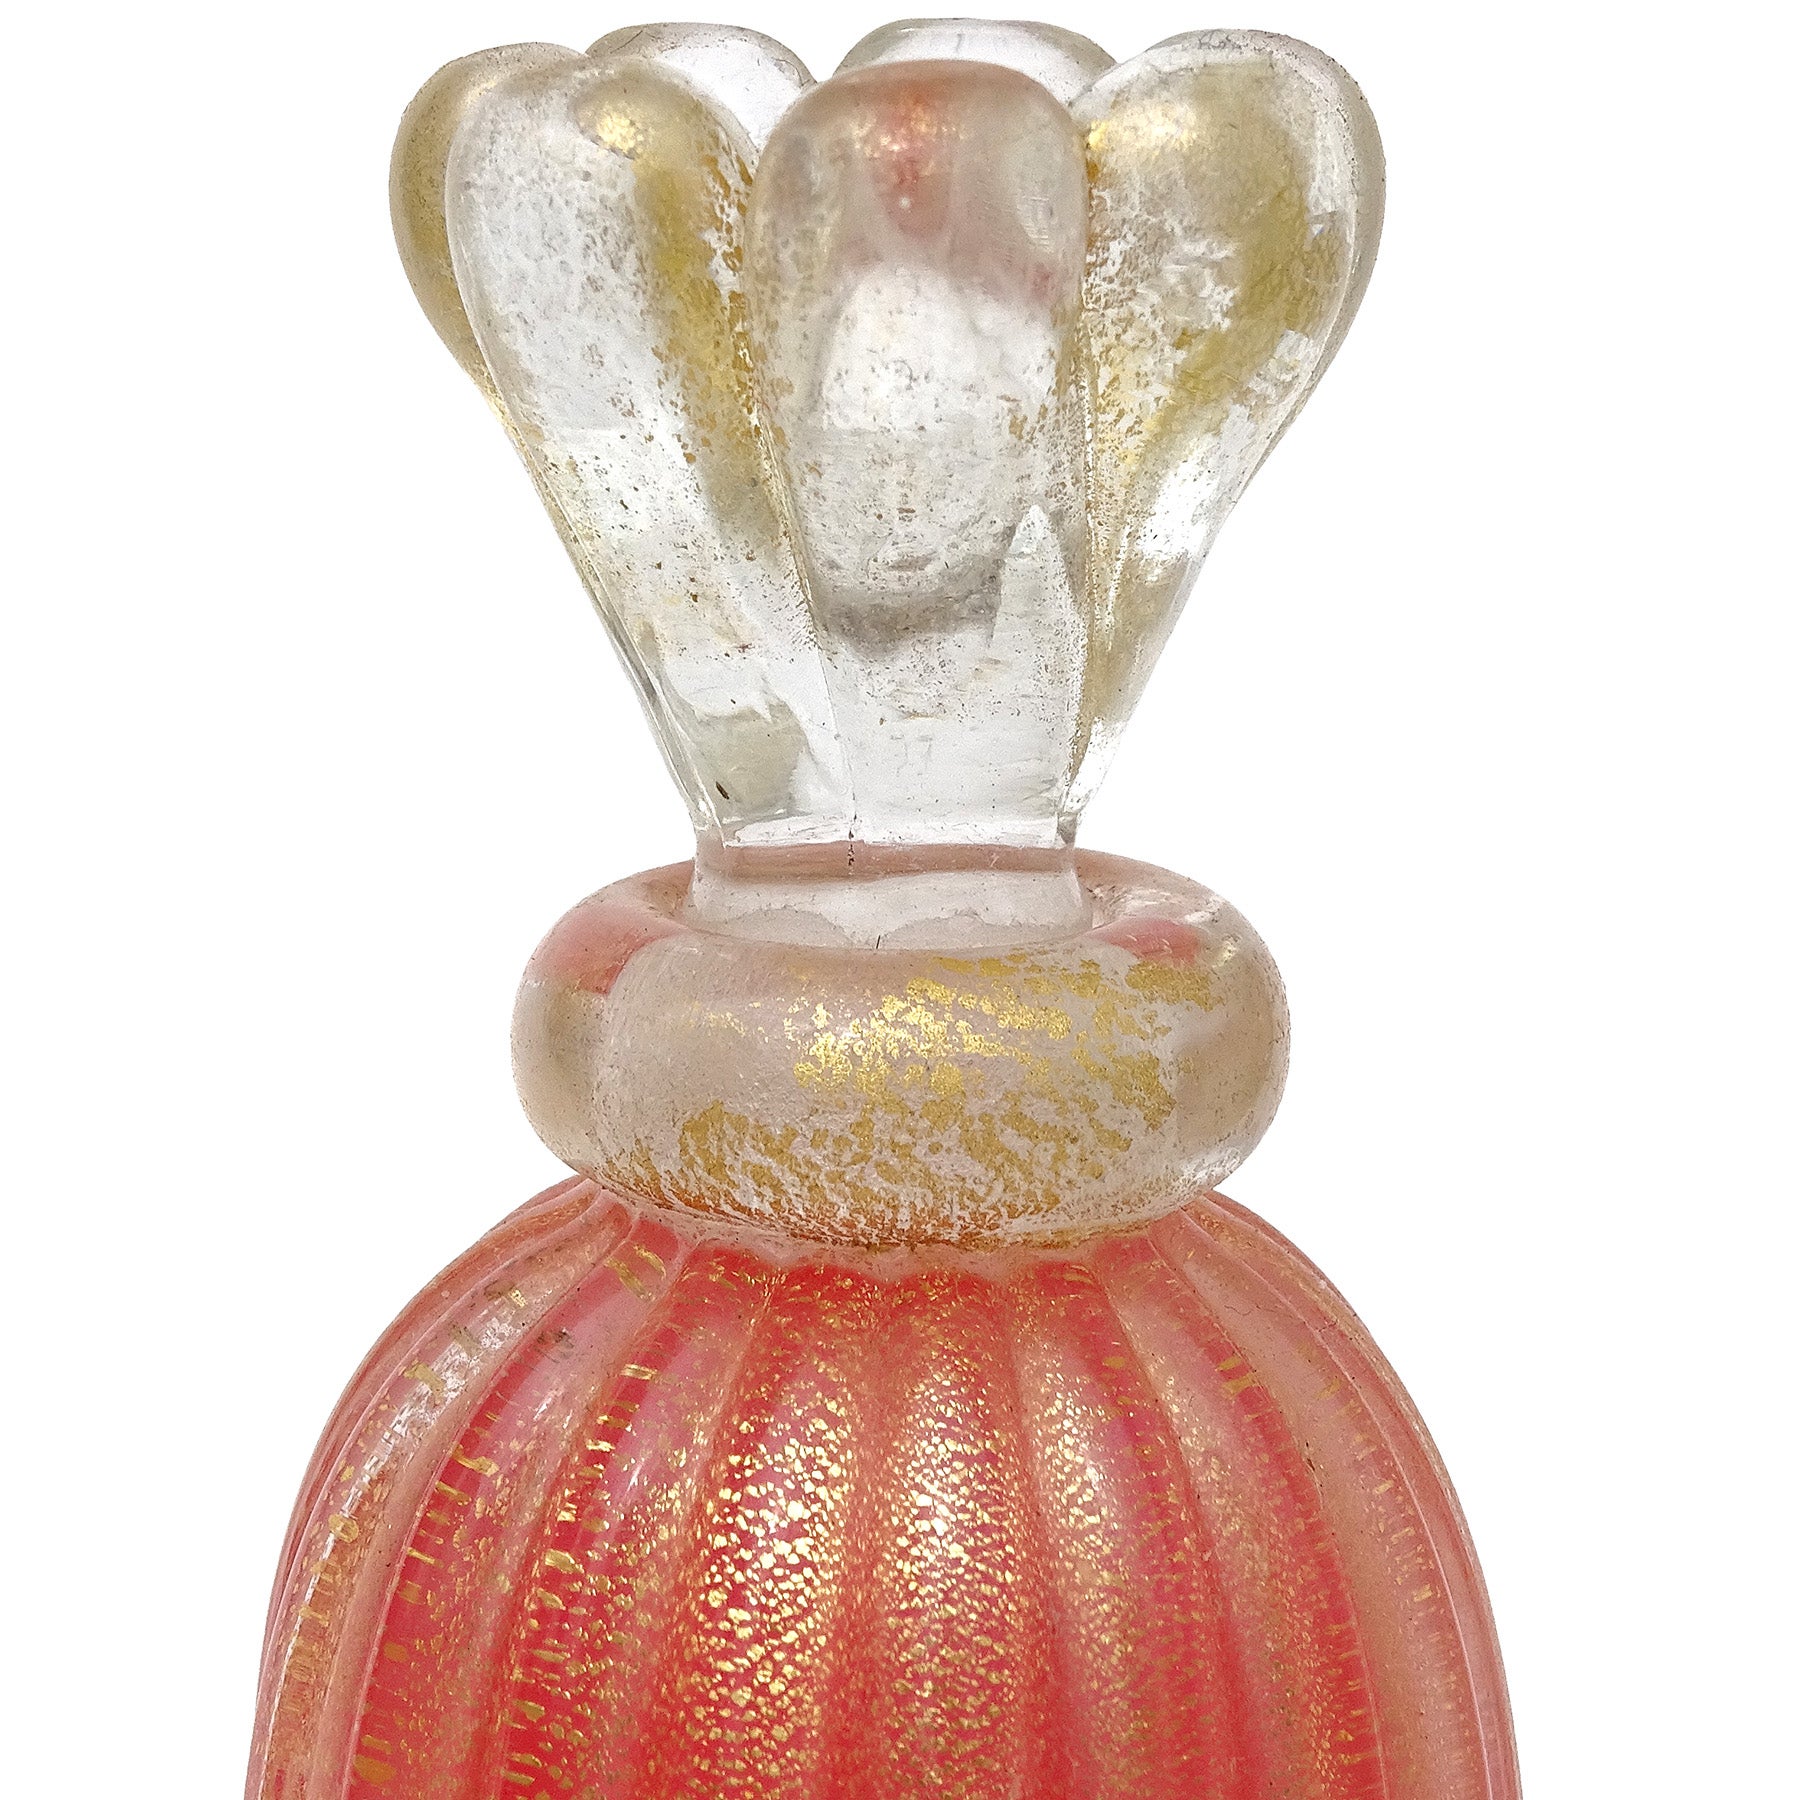 Beautiful vintage Murano hand blown coral orange and gold flecks Italian art glass vanity perfume bottle. Attributed to the Seguso Vetri D' Arte company or designer Archimede Seguso, circa 1940-1950s. The piece has an original scalloped 